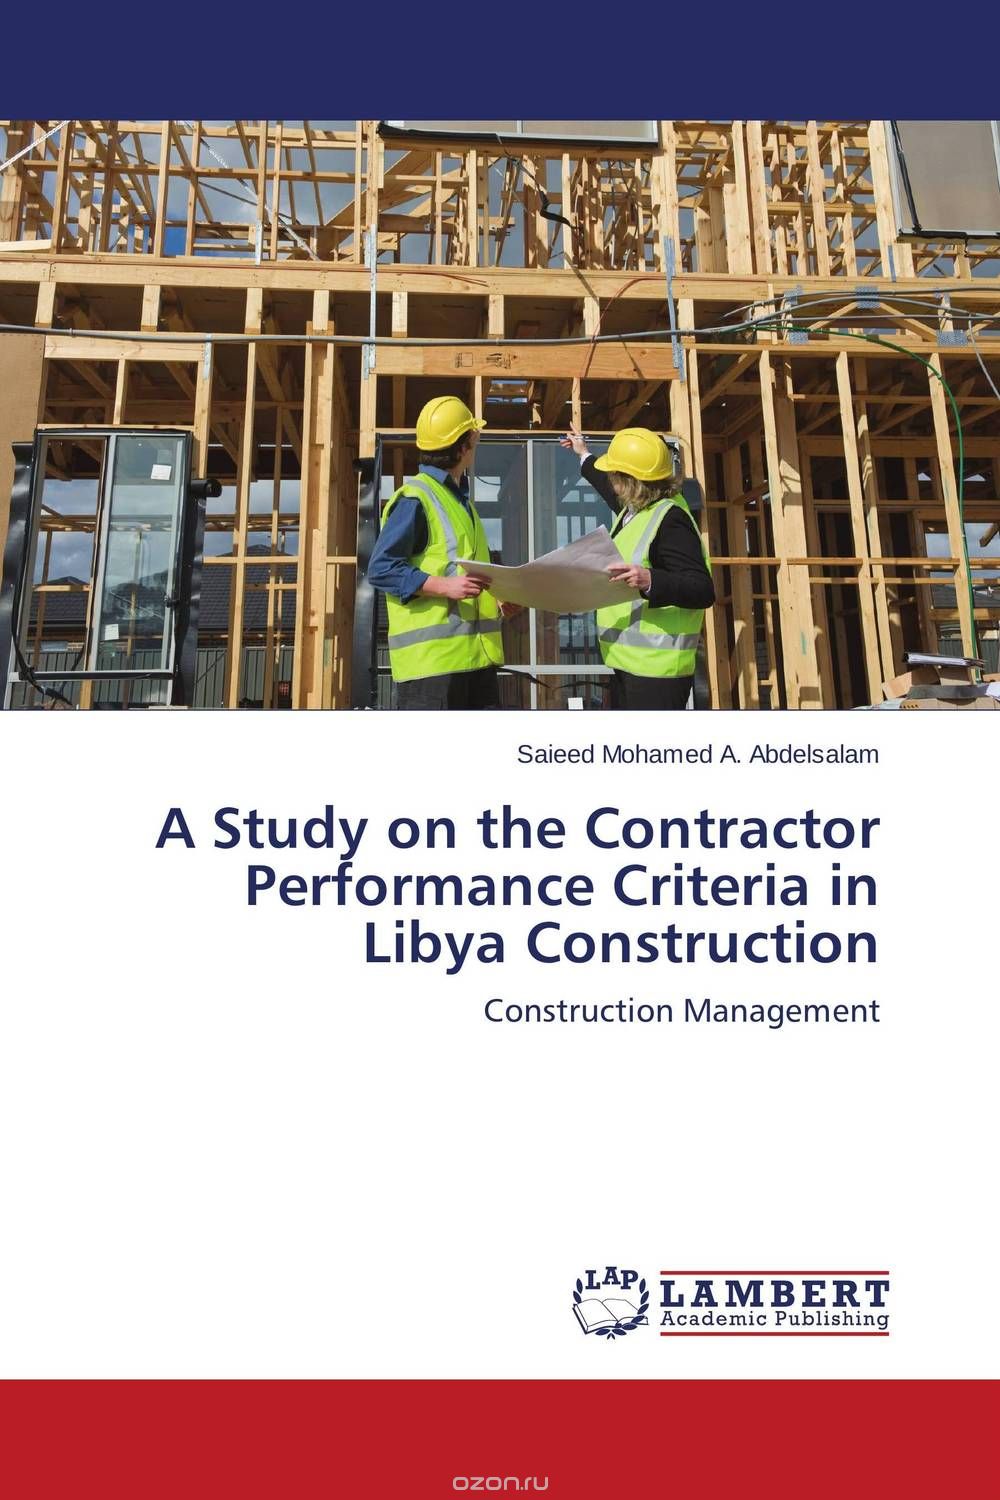 Скачать книгу "A Study on the Contractor Performance Criteria in Libya Construction"